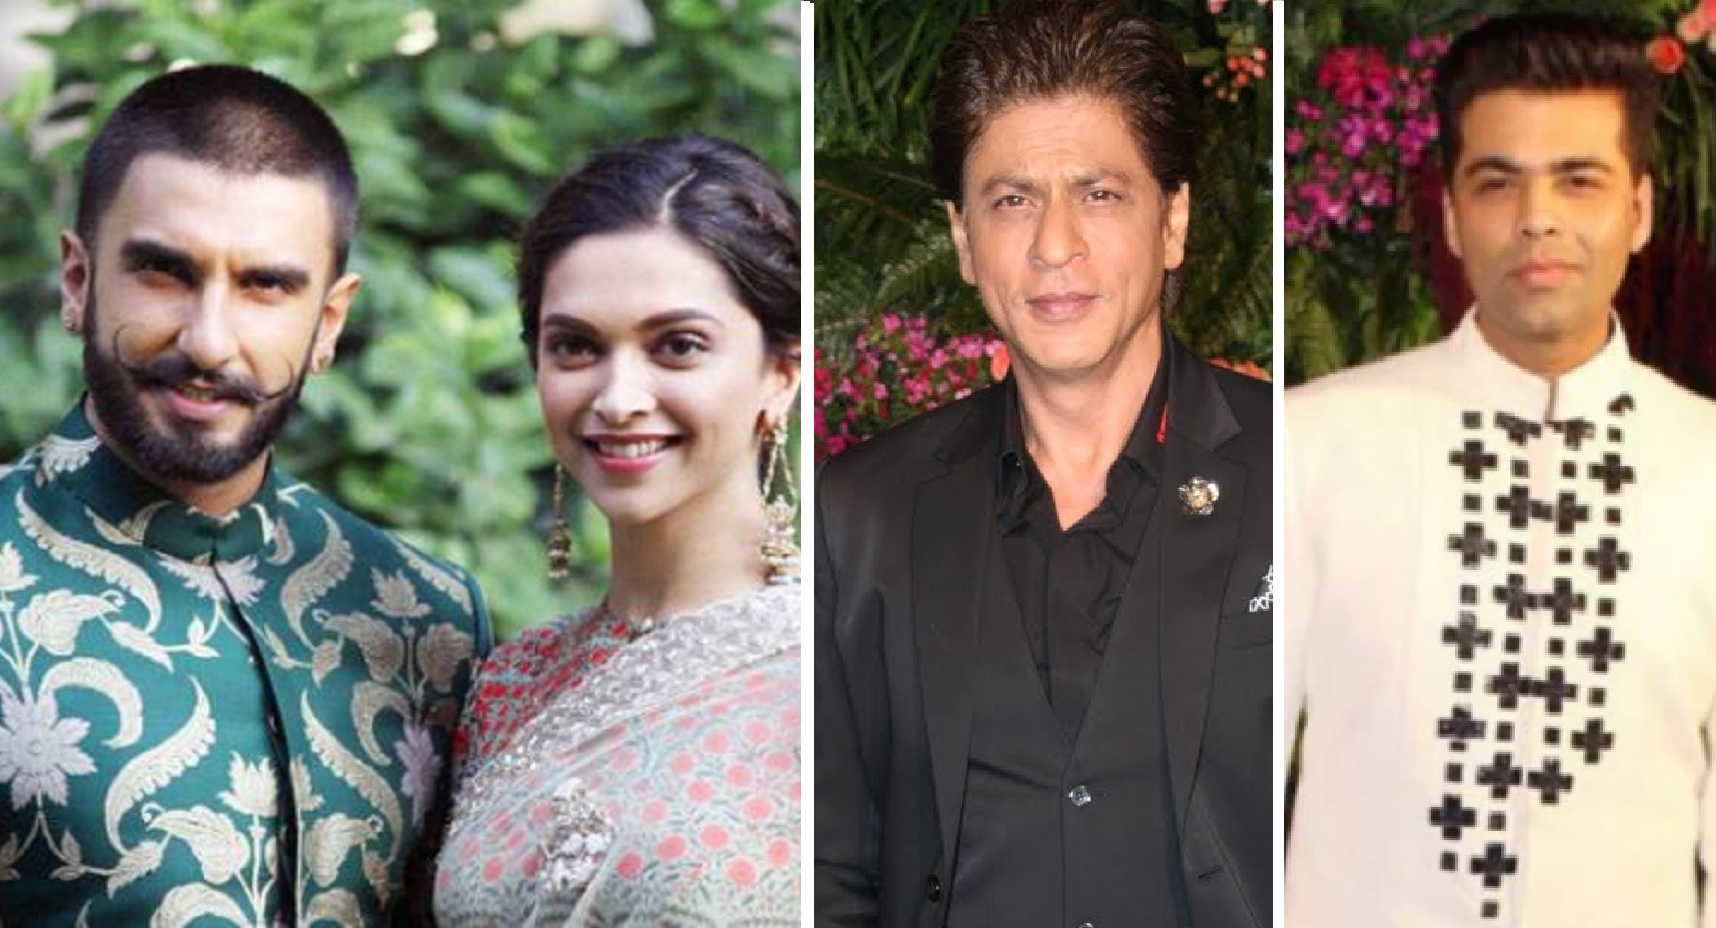 Shah Rukh, Karan Johar to Attend Deepika Ranveer Wedding. More Details here…